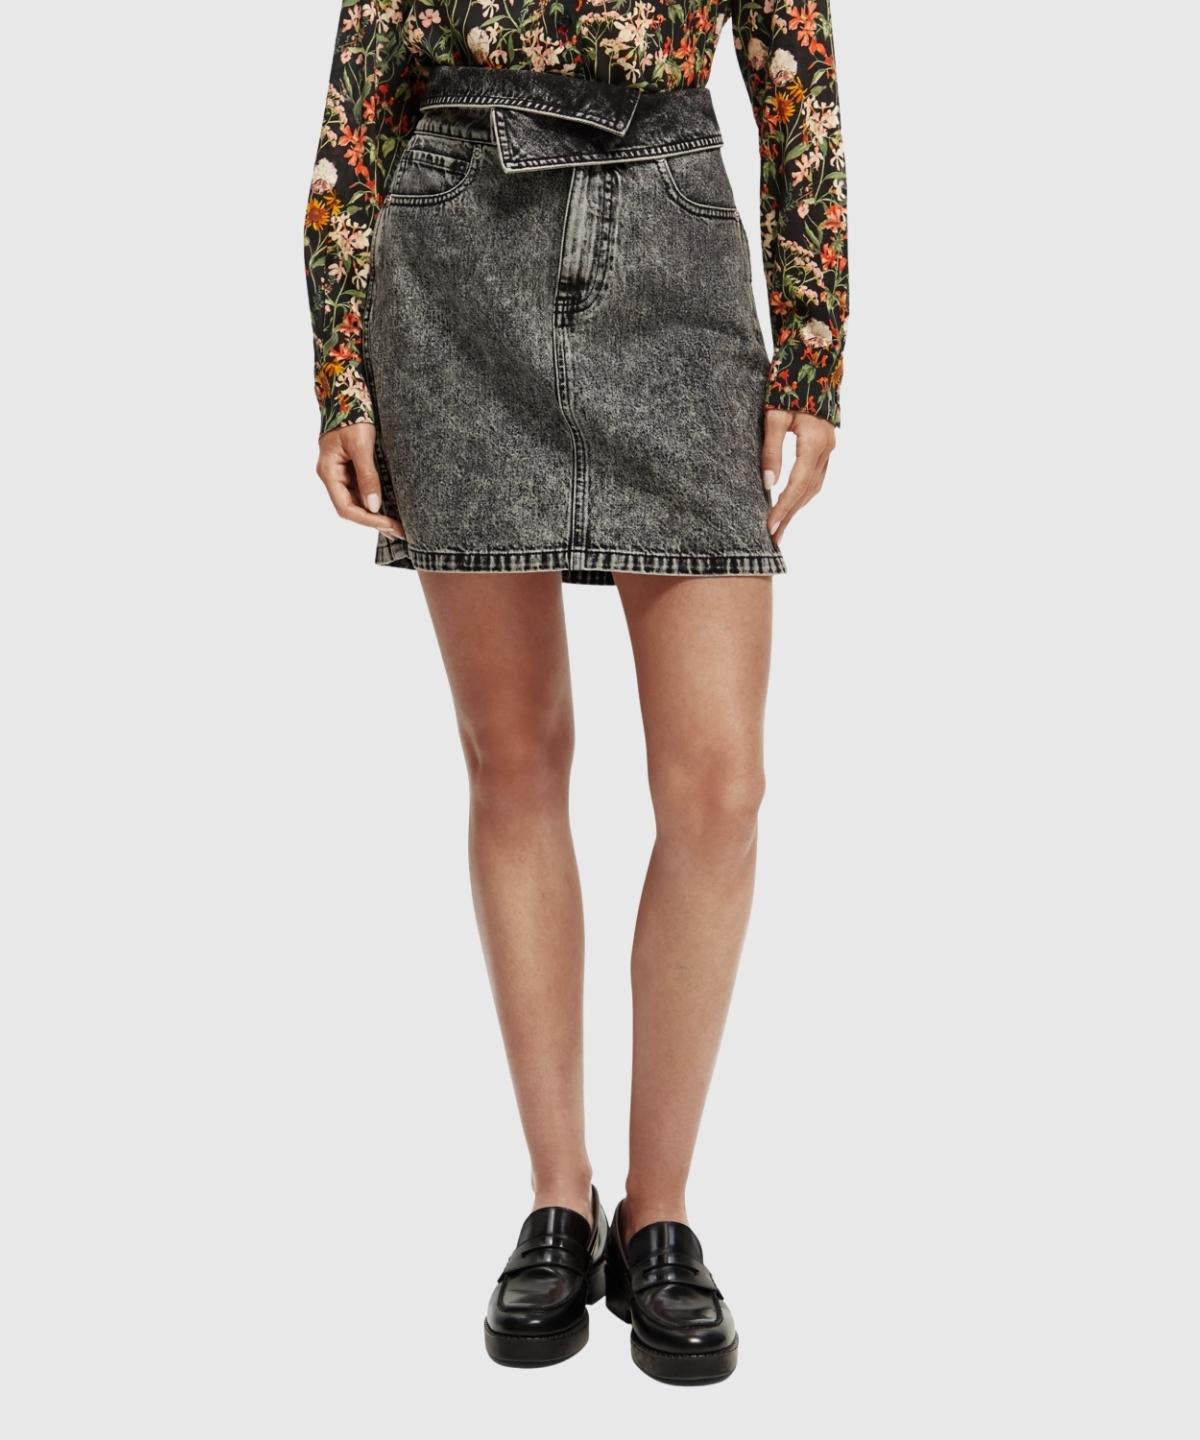 Seasonal fold over black denim skirt with wash effects